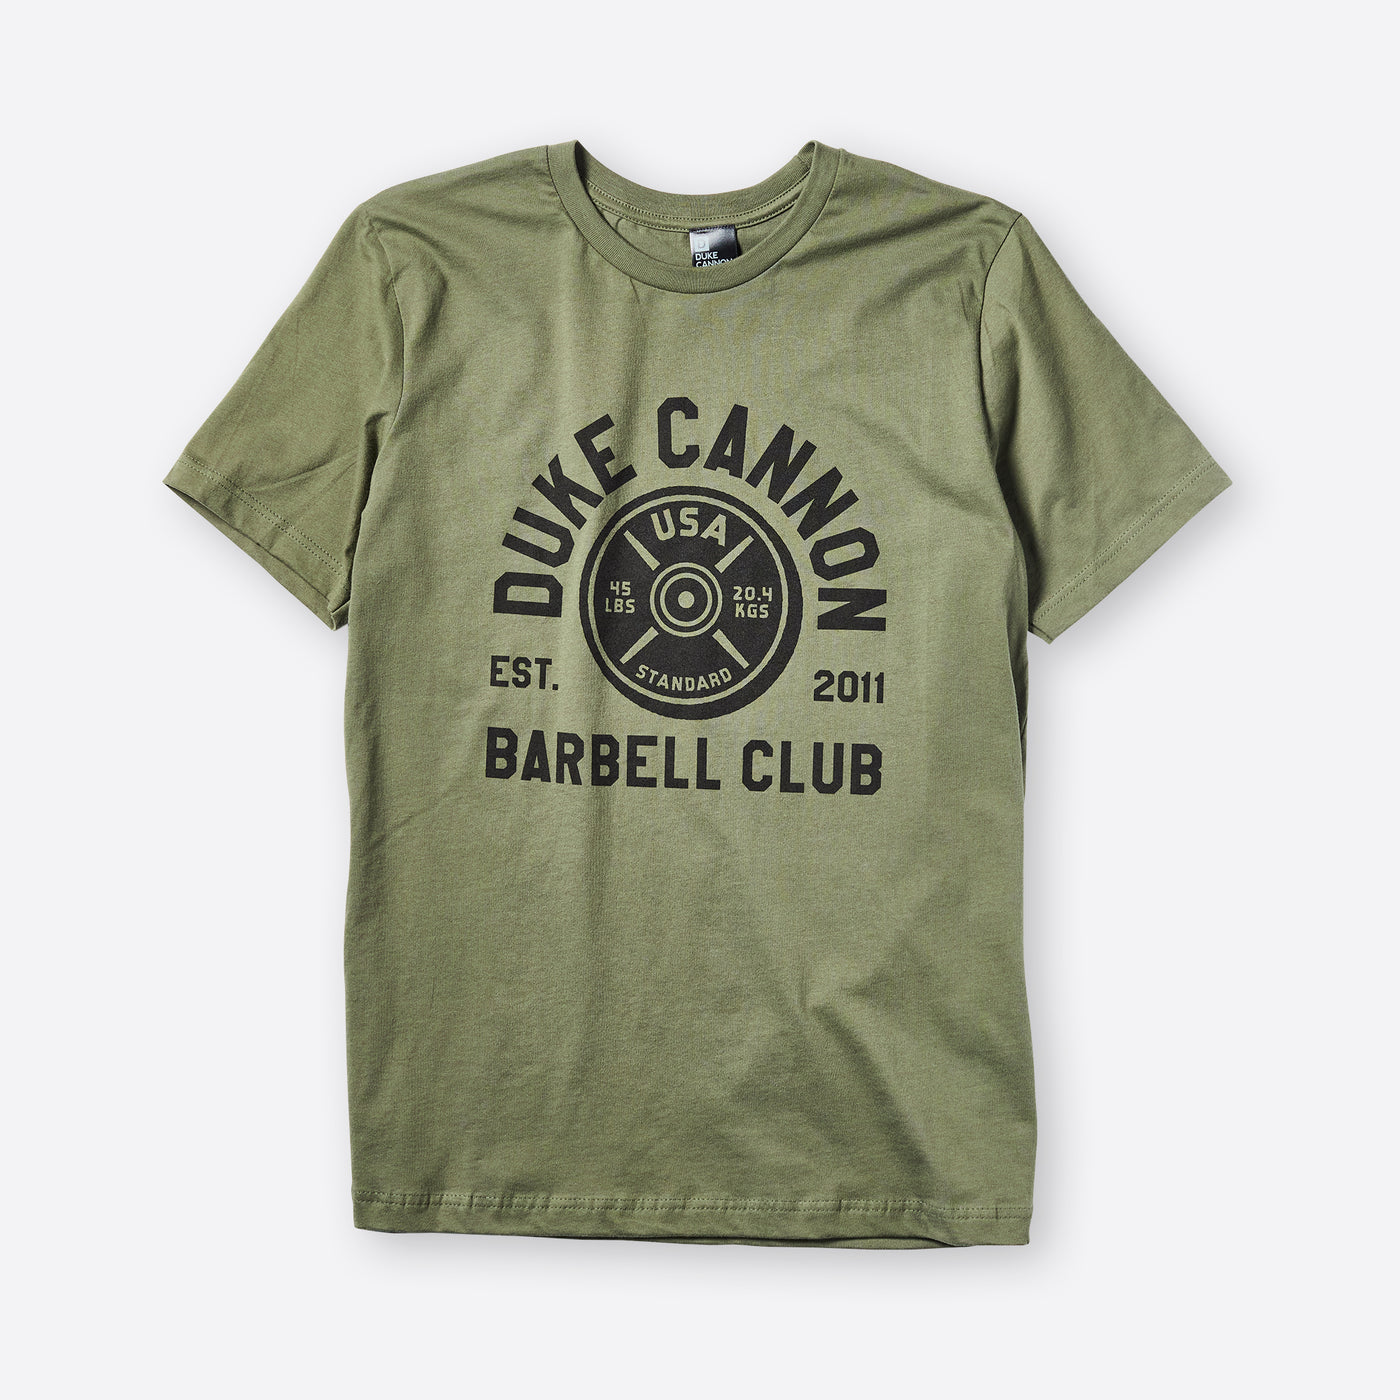 Duke Cannon Barbell Club Quality Tee